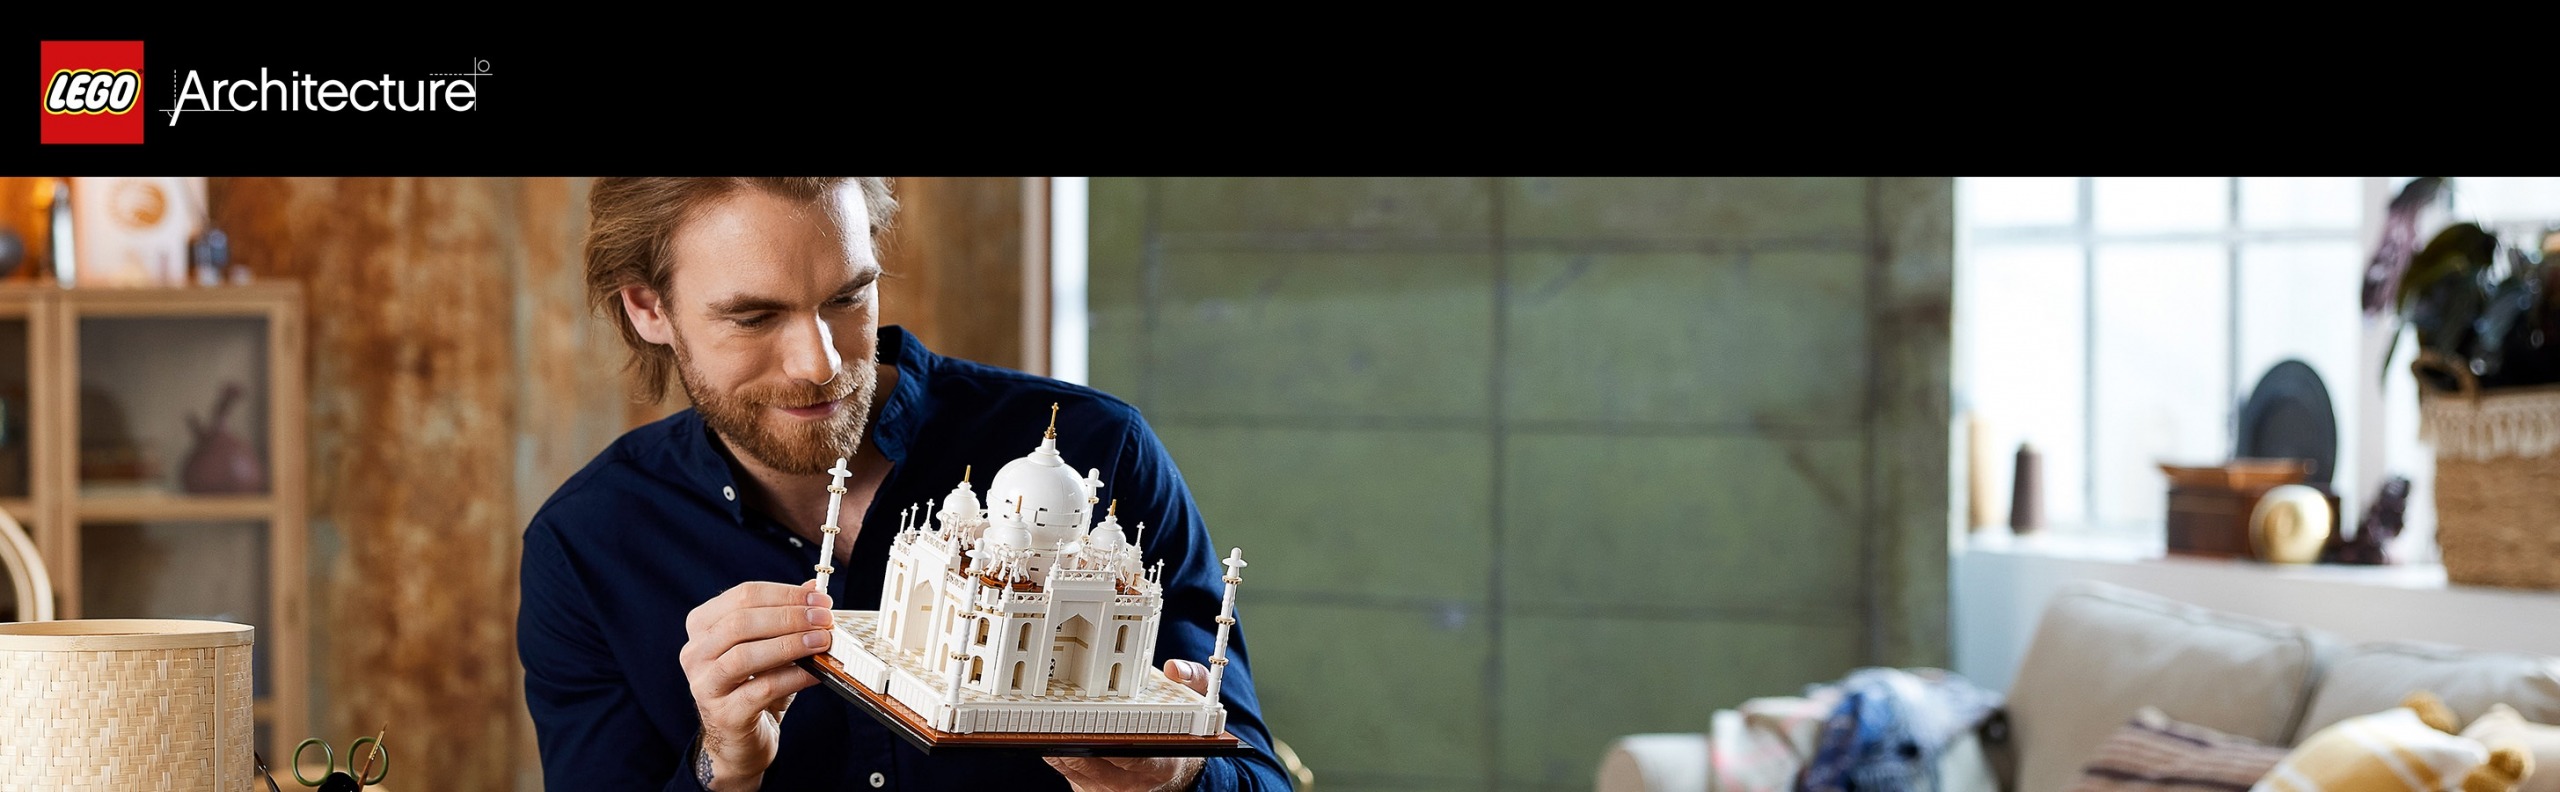 UNIVERSO ENCANTADO - Taj Mahal Arquitetura – 21056 - LEGO SET